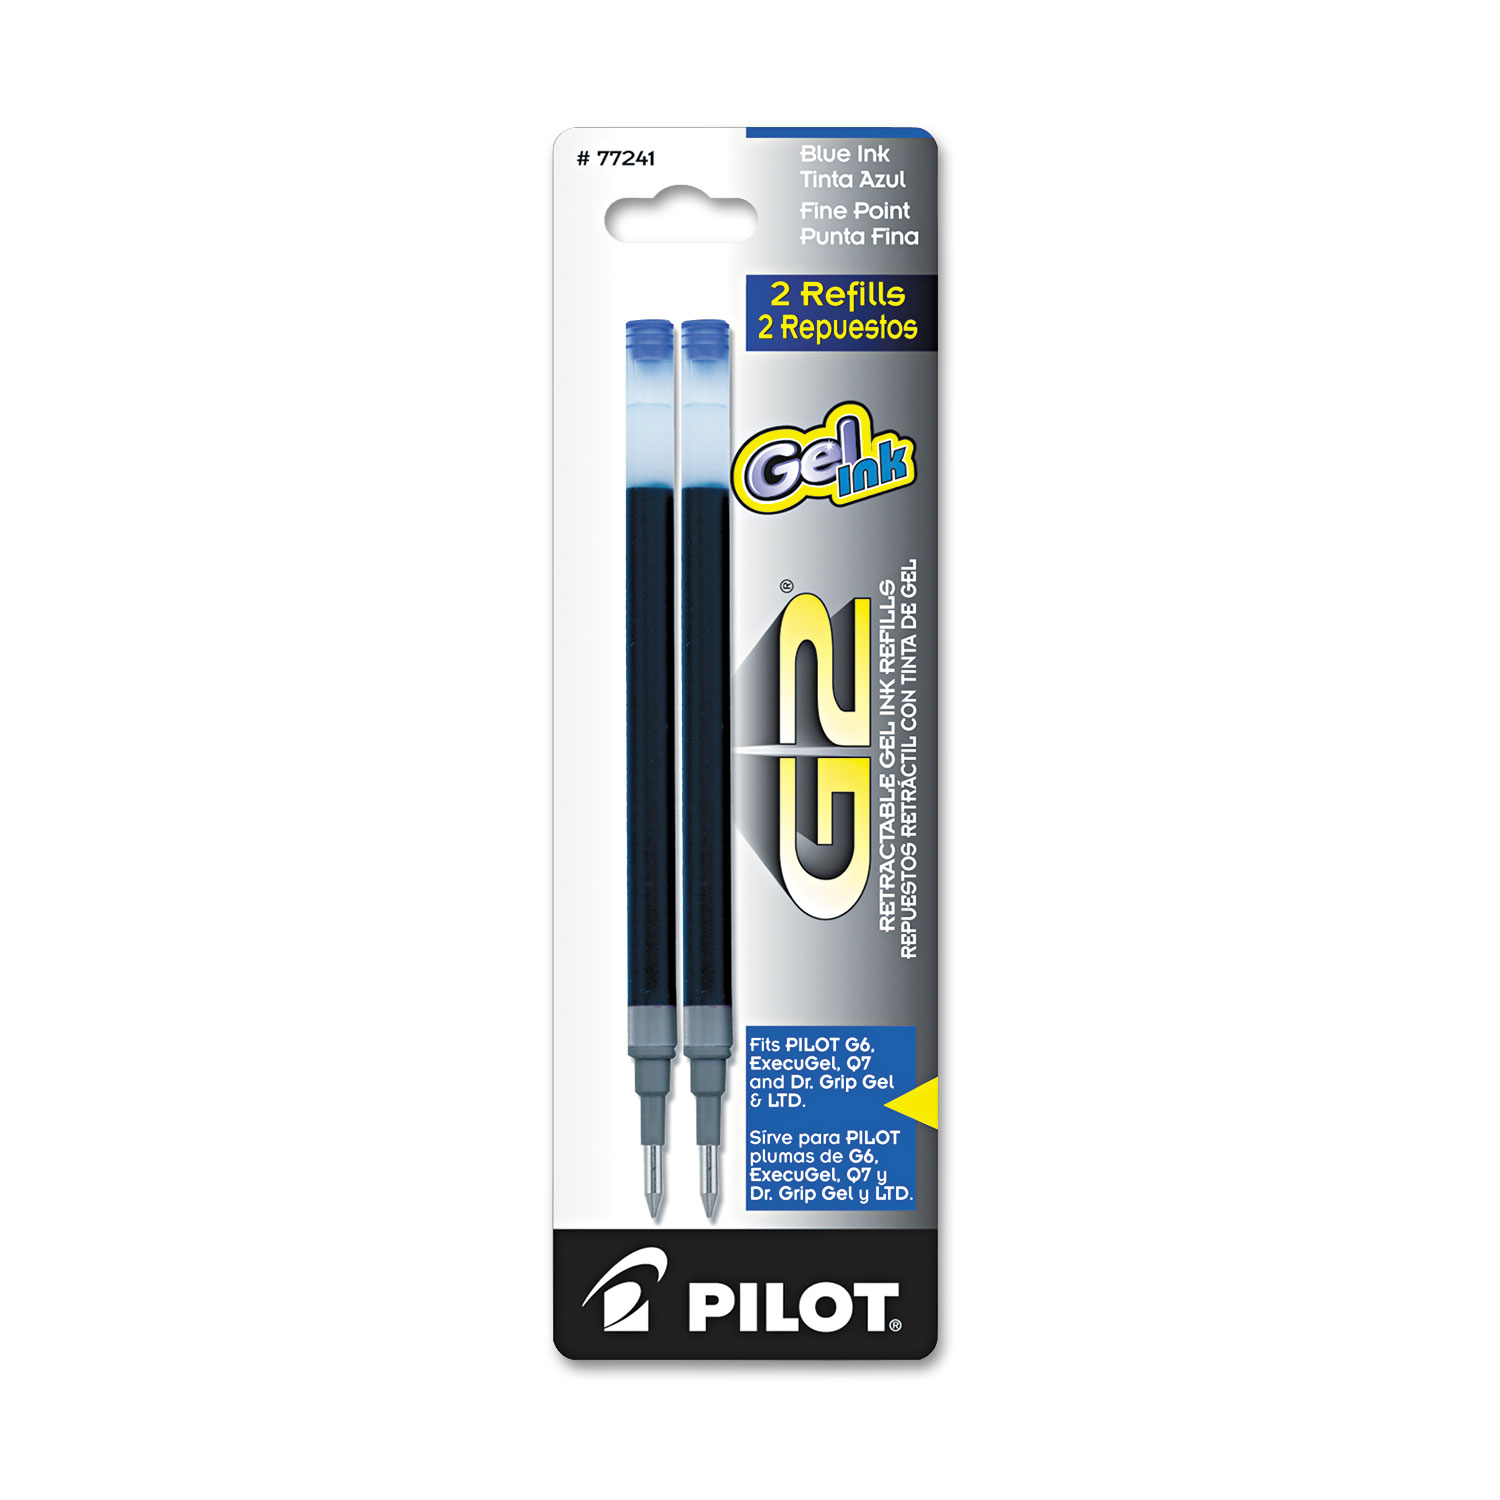  Pilot 77241 Refill for Pilot Gel Pens, Fine Point, Blue Ink, 2/Pack (PIL77241) 